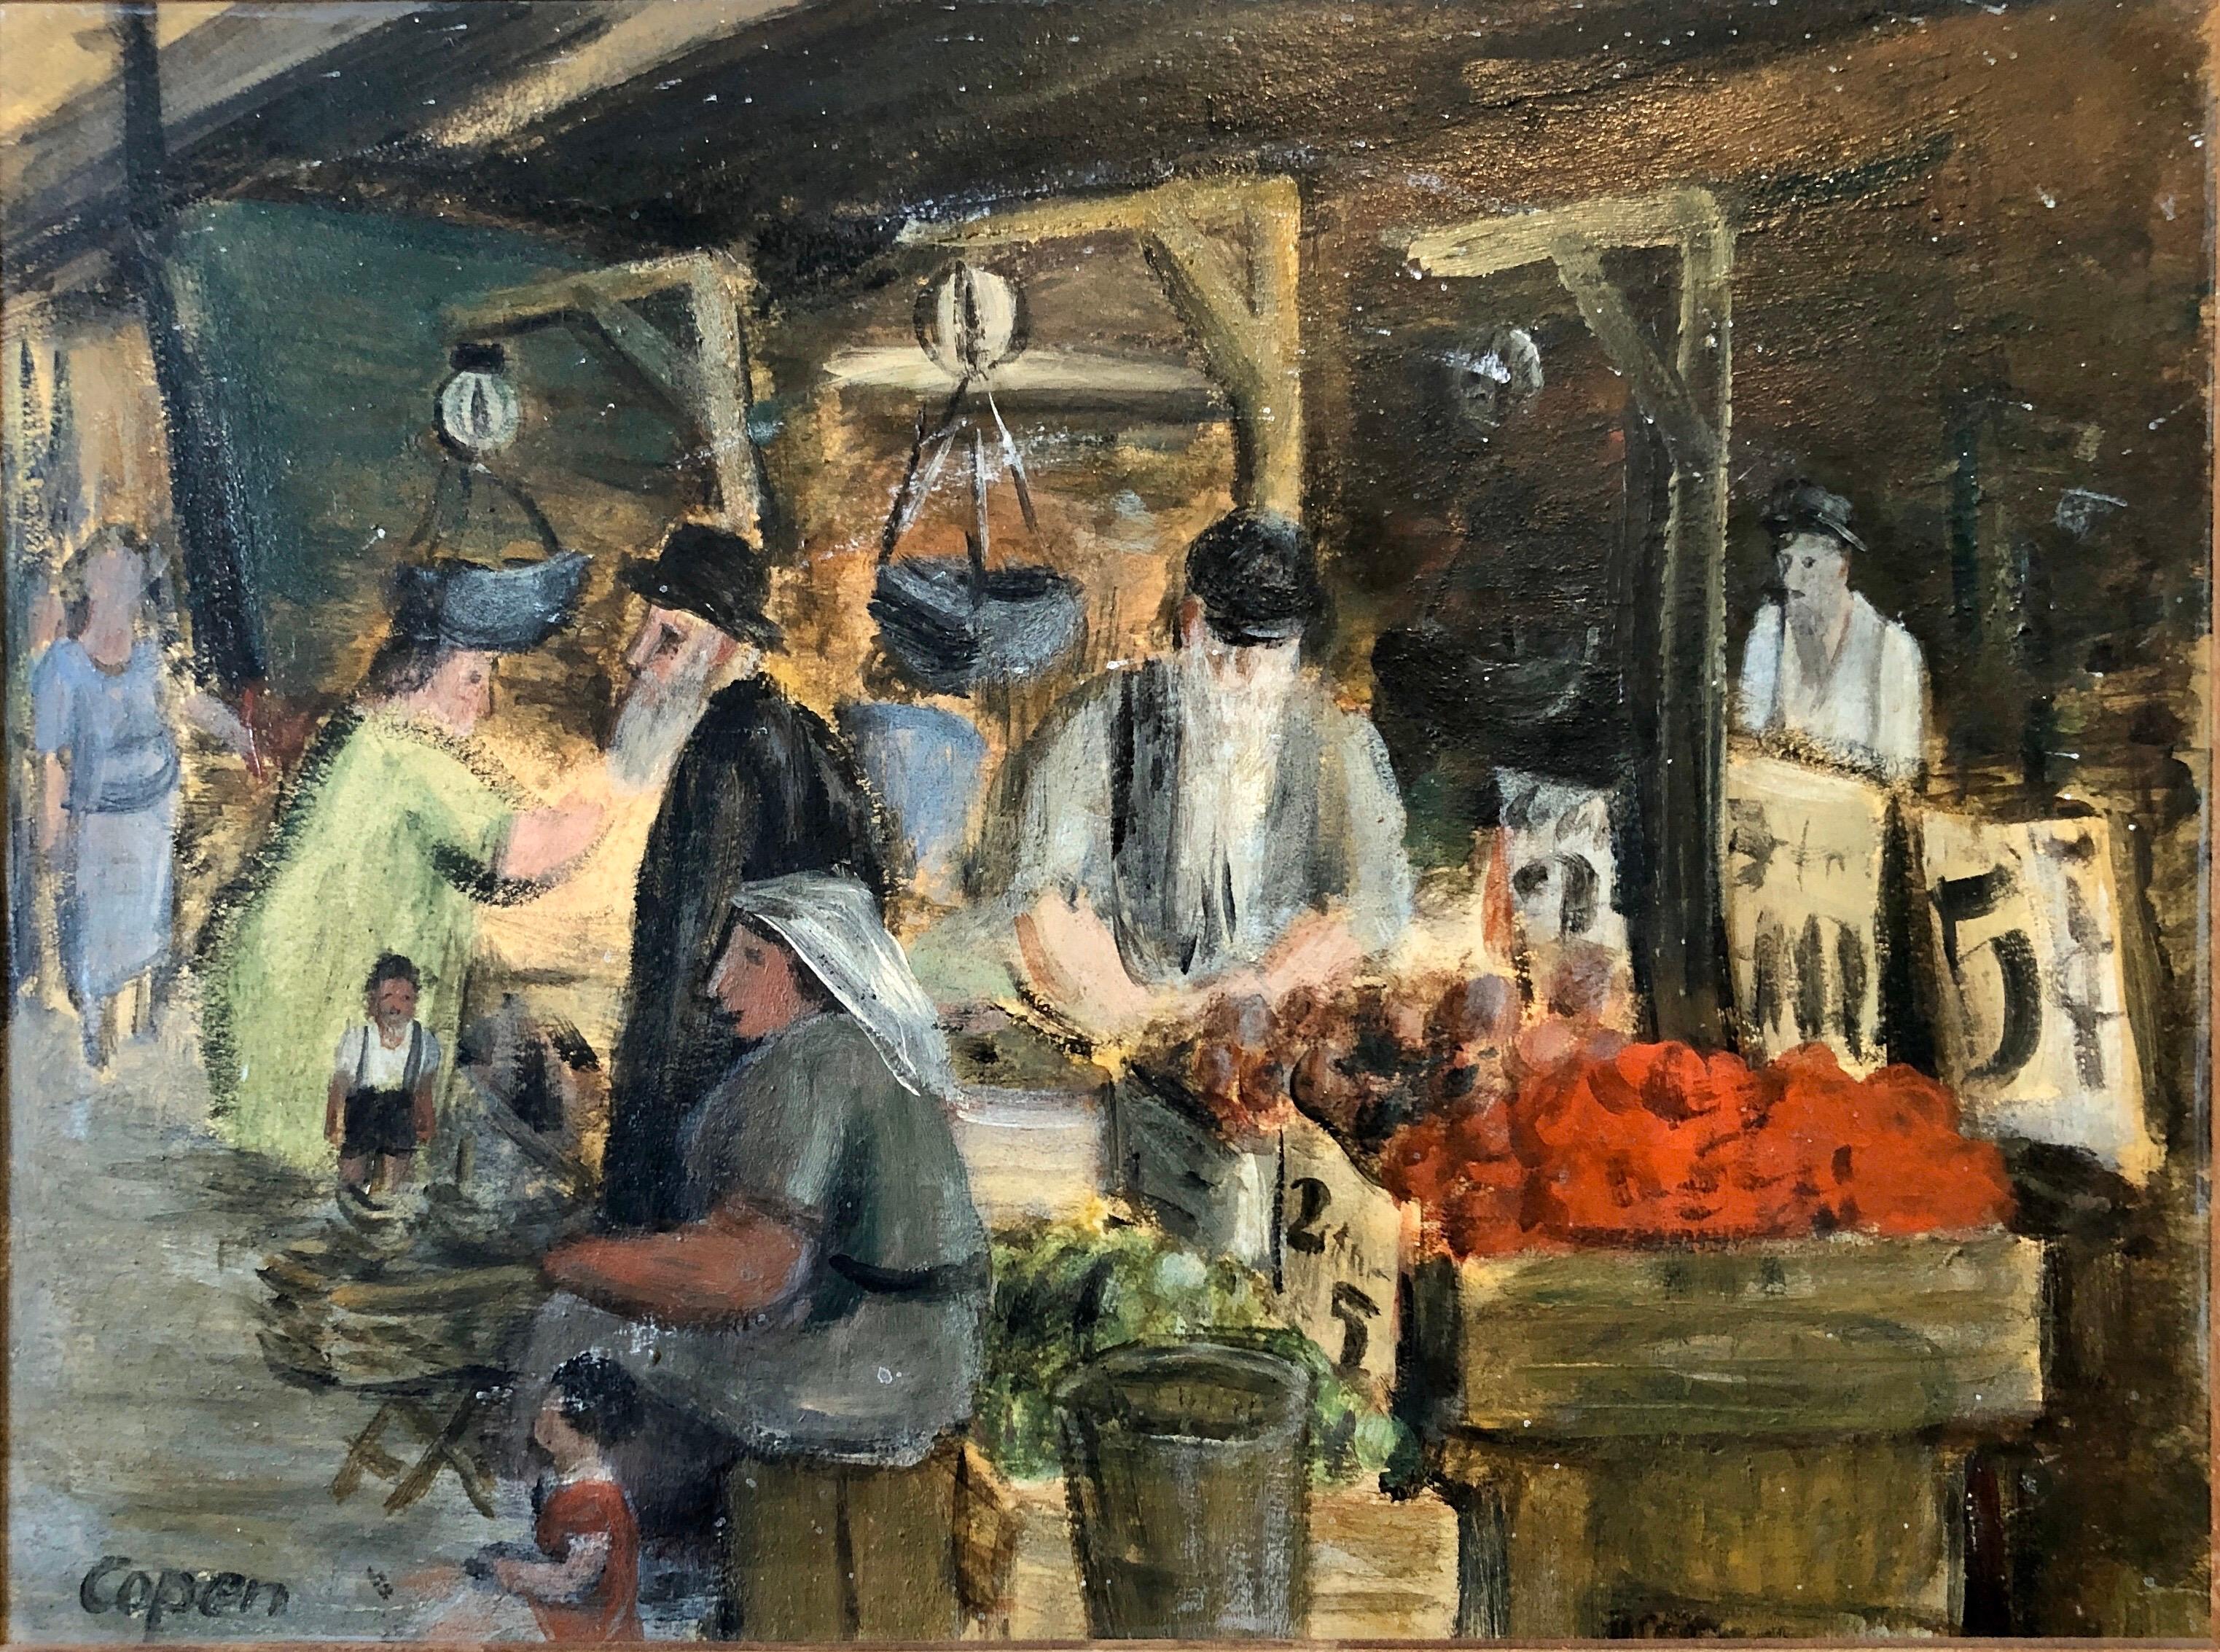  Judaica Market Scene, Shuk, European Hasidic Rabbi Oil Painting - Brown Figurative Painting by Unknown